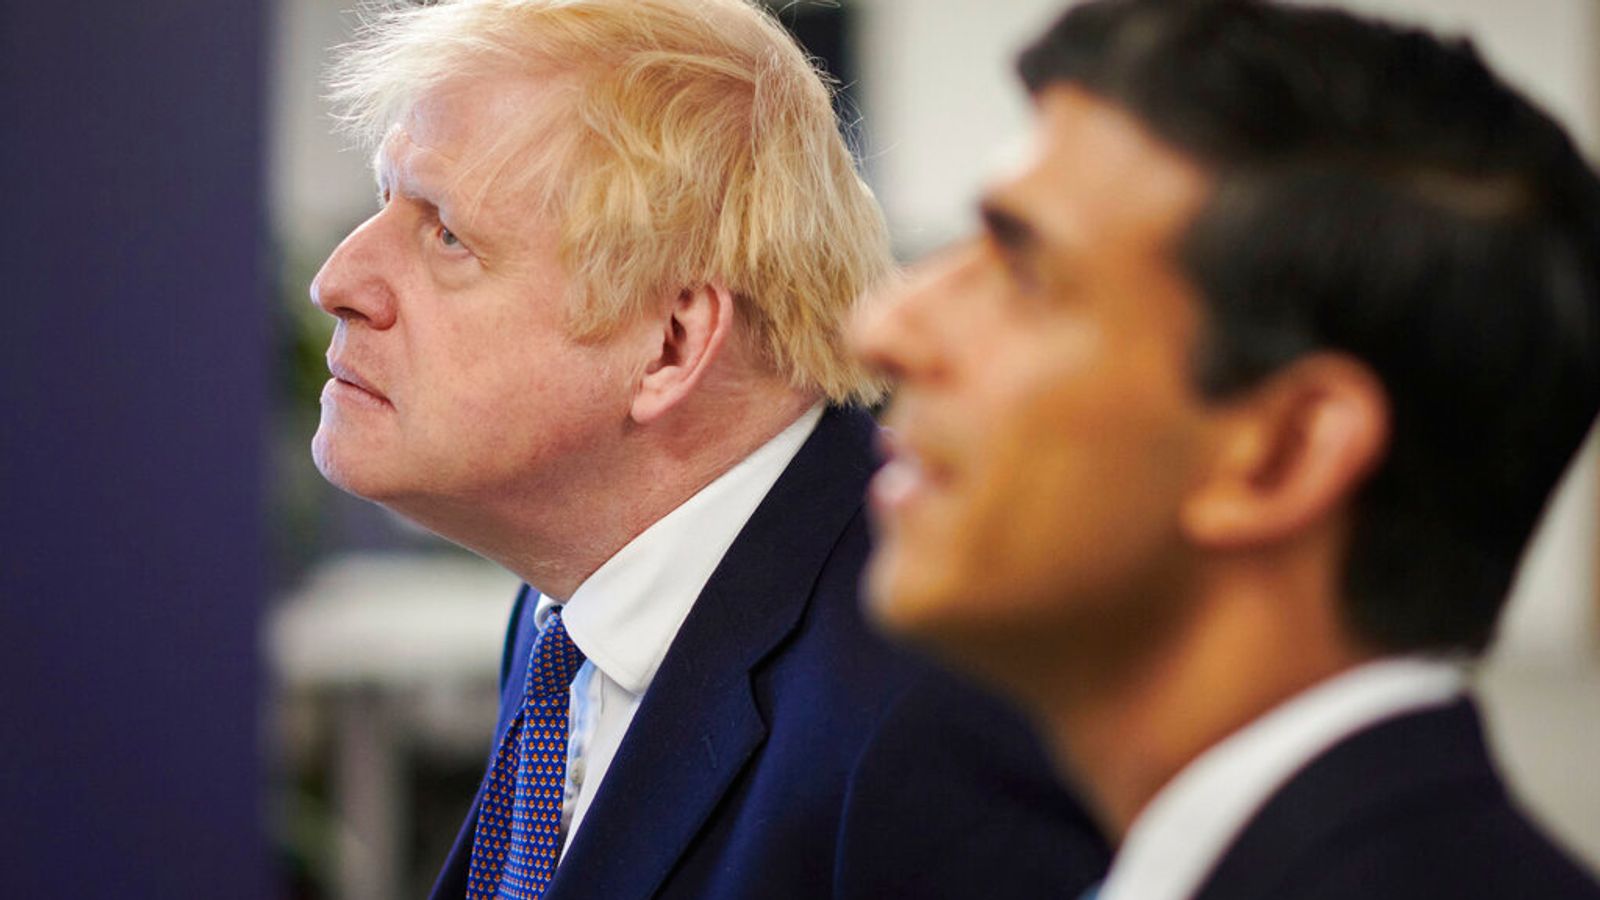 Cabinet Office loses legal battle over Boris Johnson's COVID WhatsApp messages